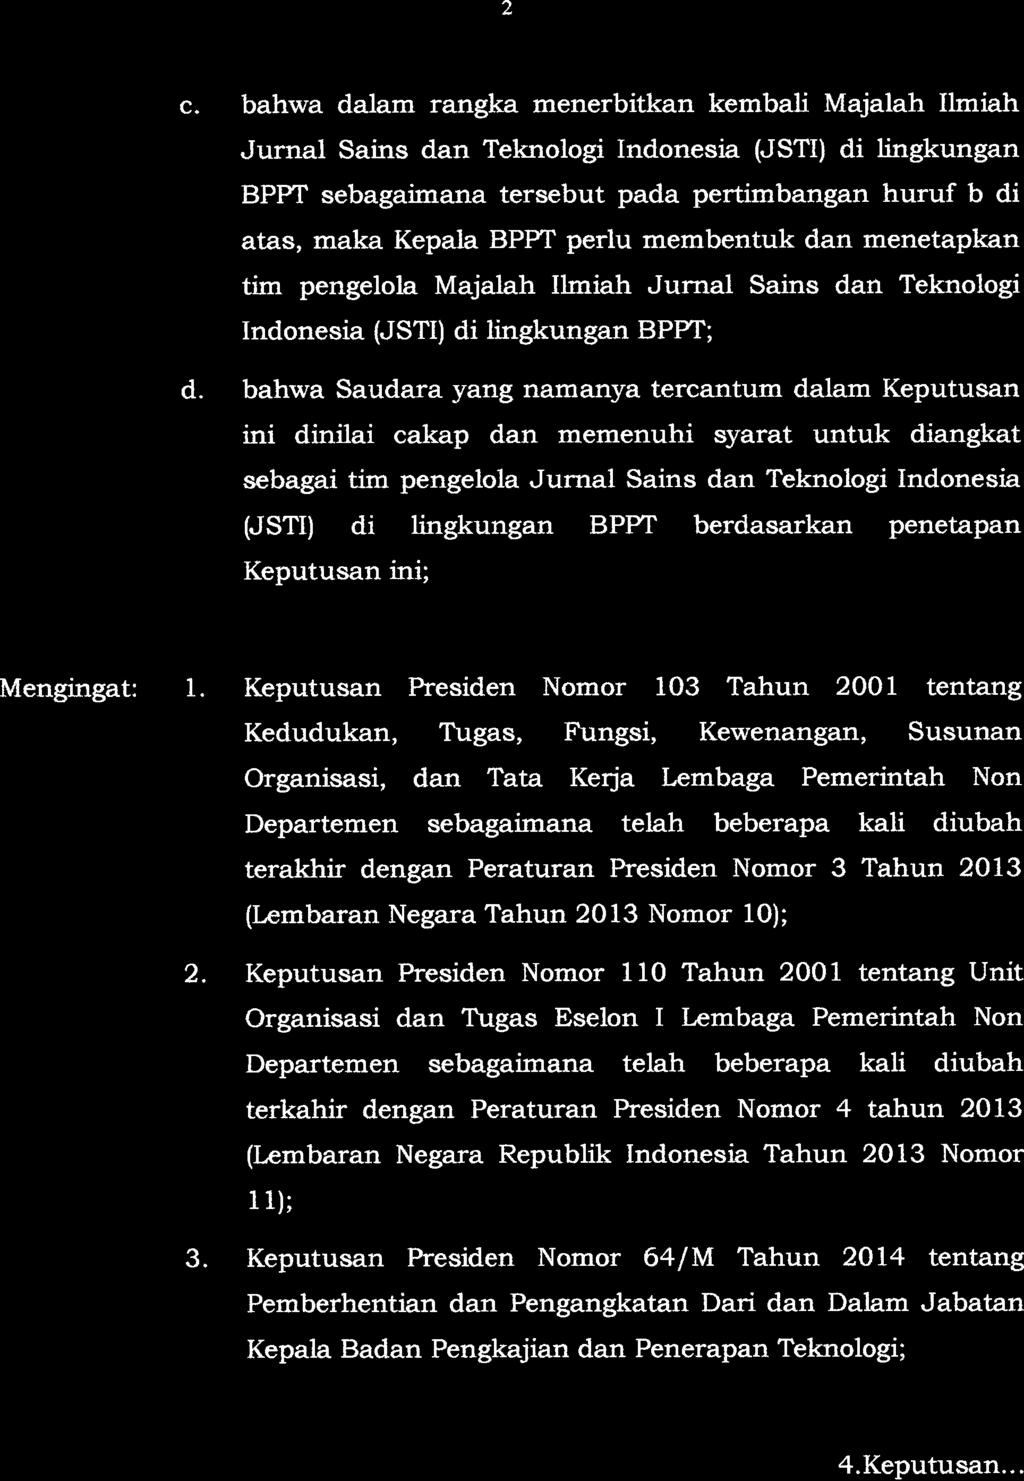 2 c. bahwa dalam rangka menerbitkan kembali Majalah Ilmiah Jurnal Sains dan Teknologi Indonesia (JSTI) di lingkungan BPPT sebagaimana tersebut pada pertimbangan huruf b di atas, maka Kepala BPPT